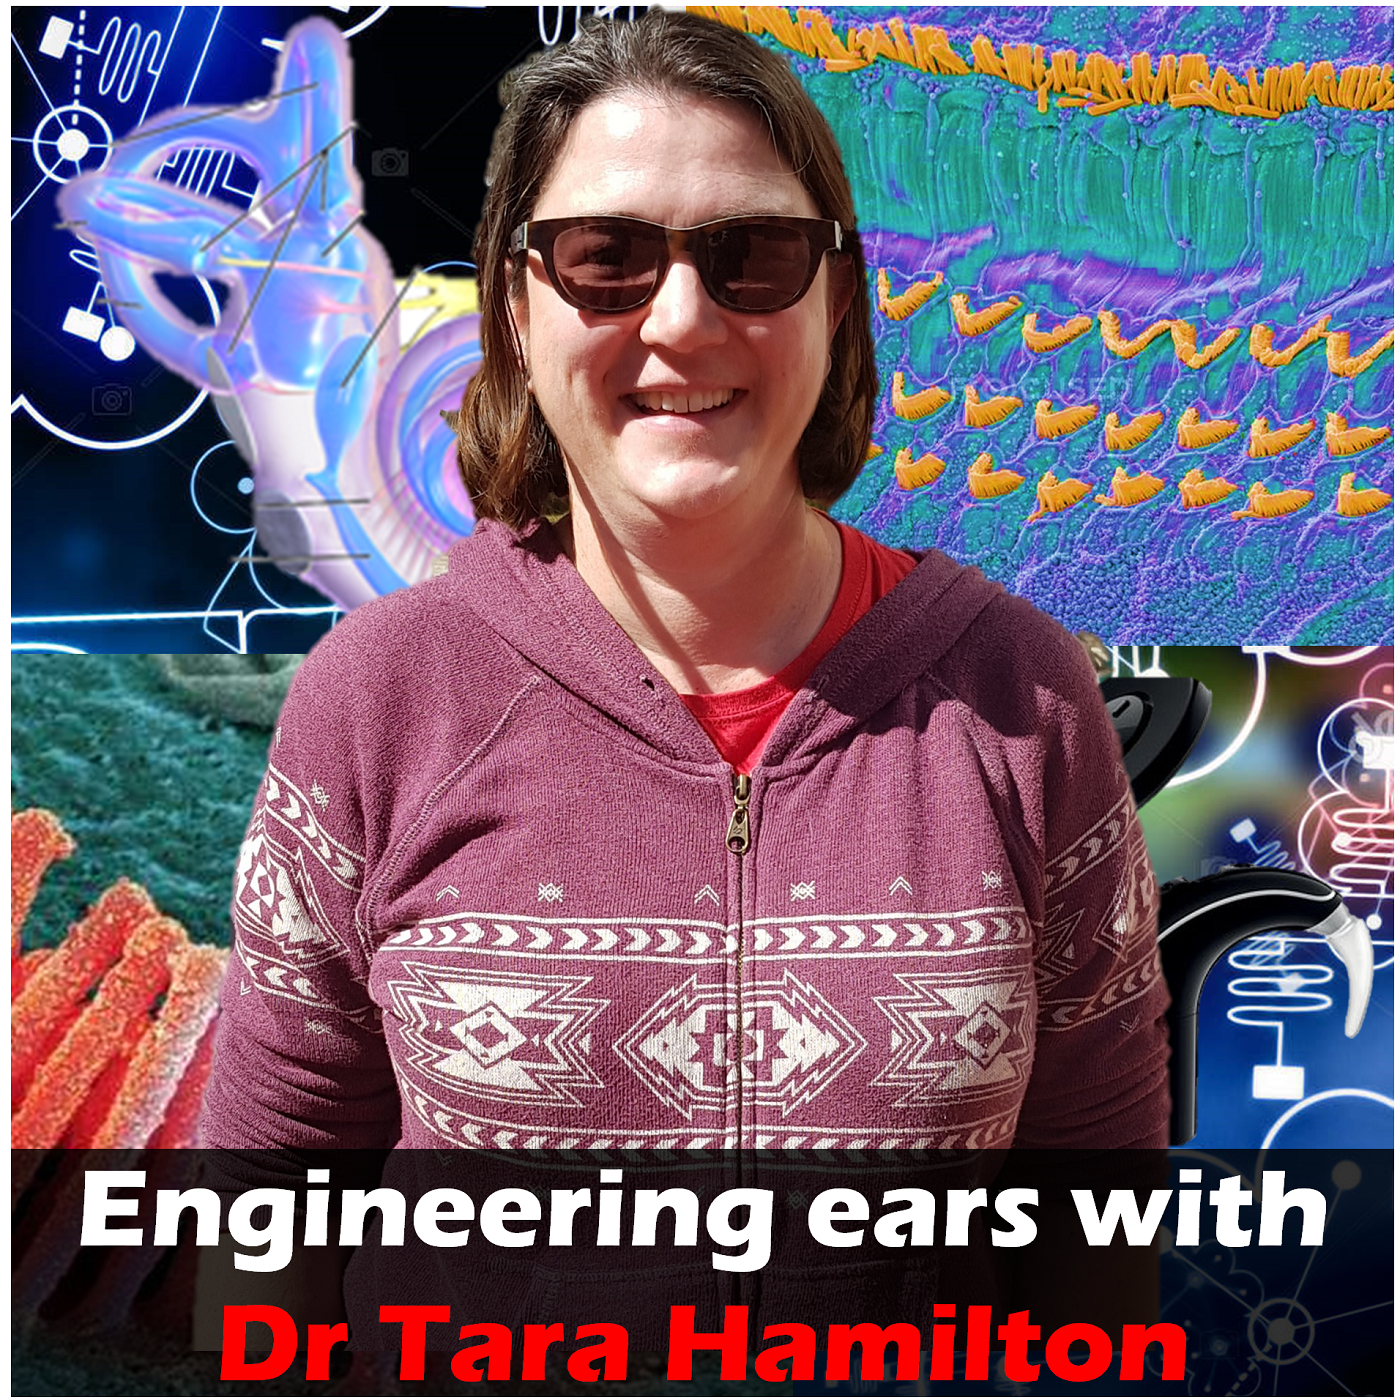 4.4 Engineering ears with Dr Tara Hamilton